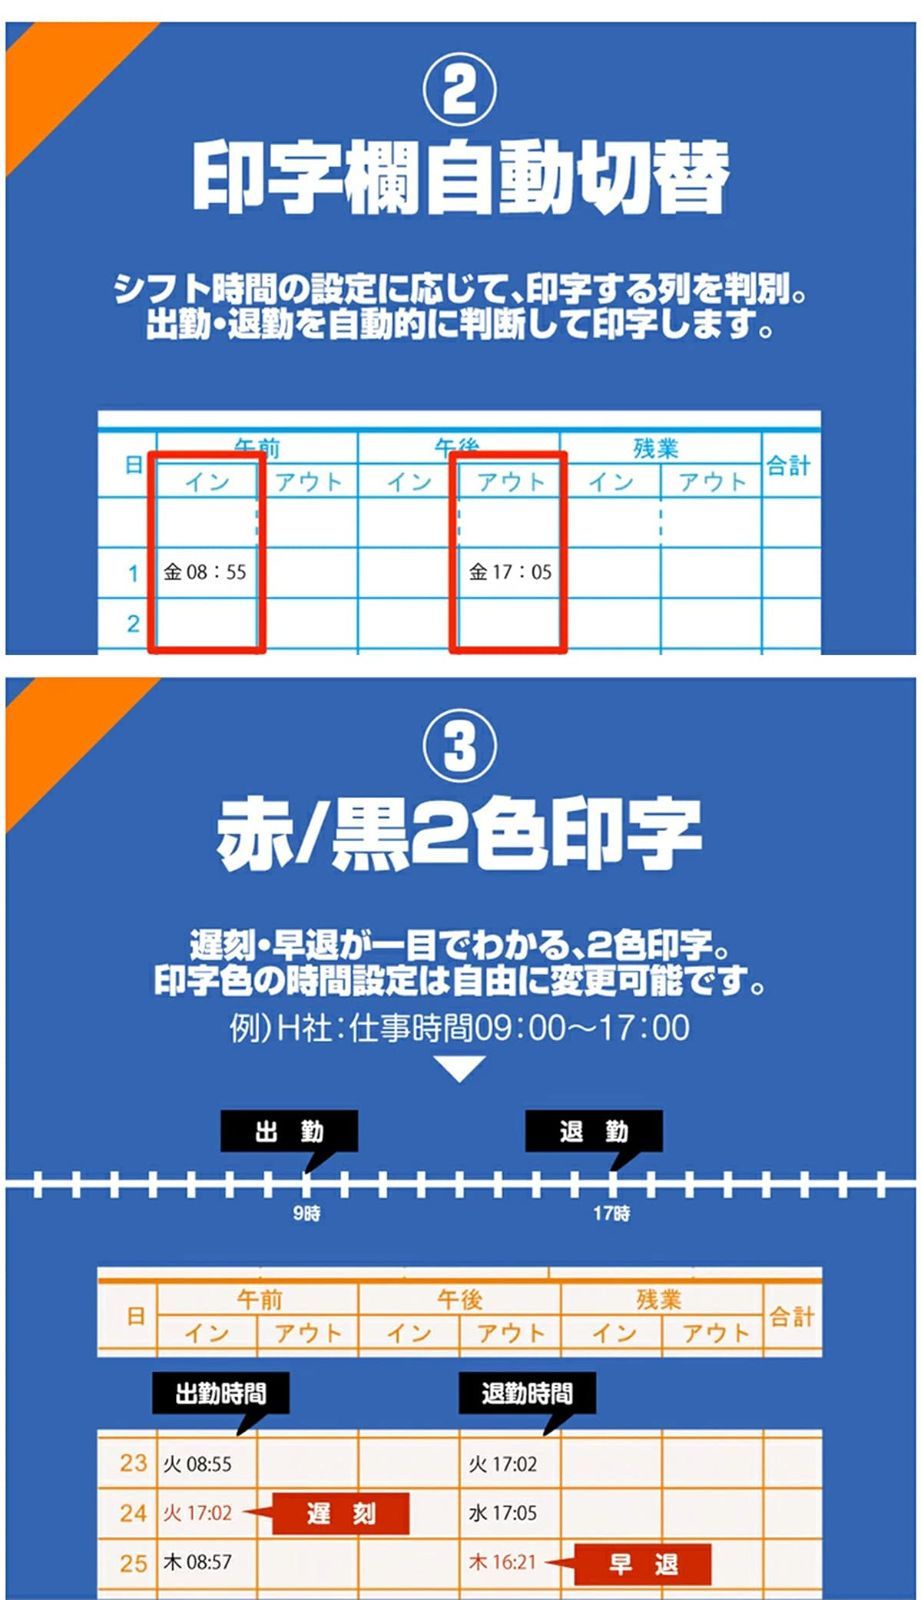 TOKAIZ タイムレコーダー 本体 6欄印字可能 両面印字モデル タイムカード５０枚付き TR-001s - 9